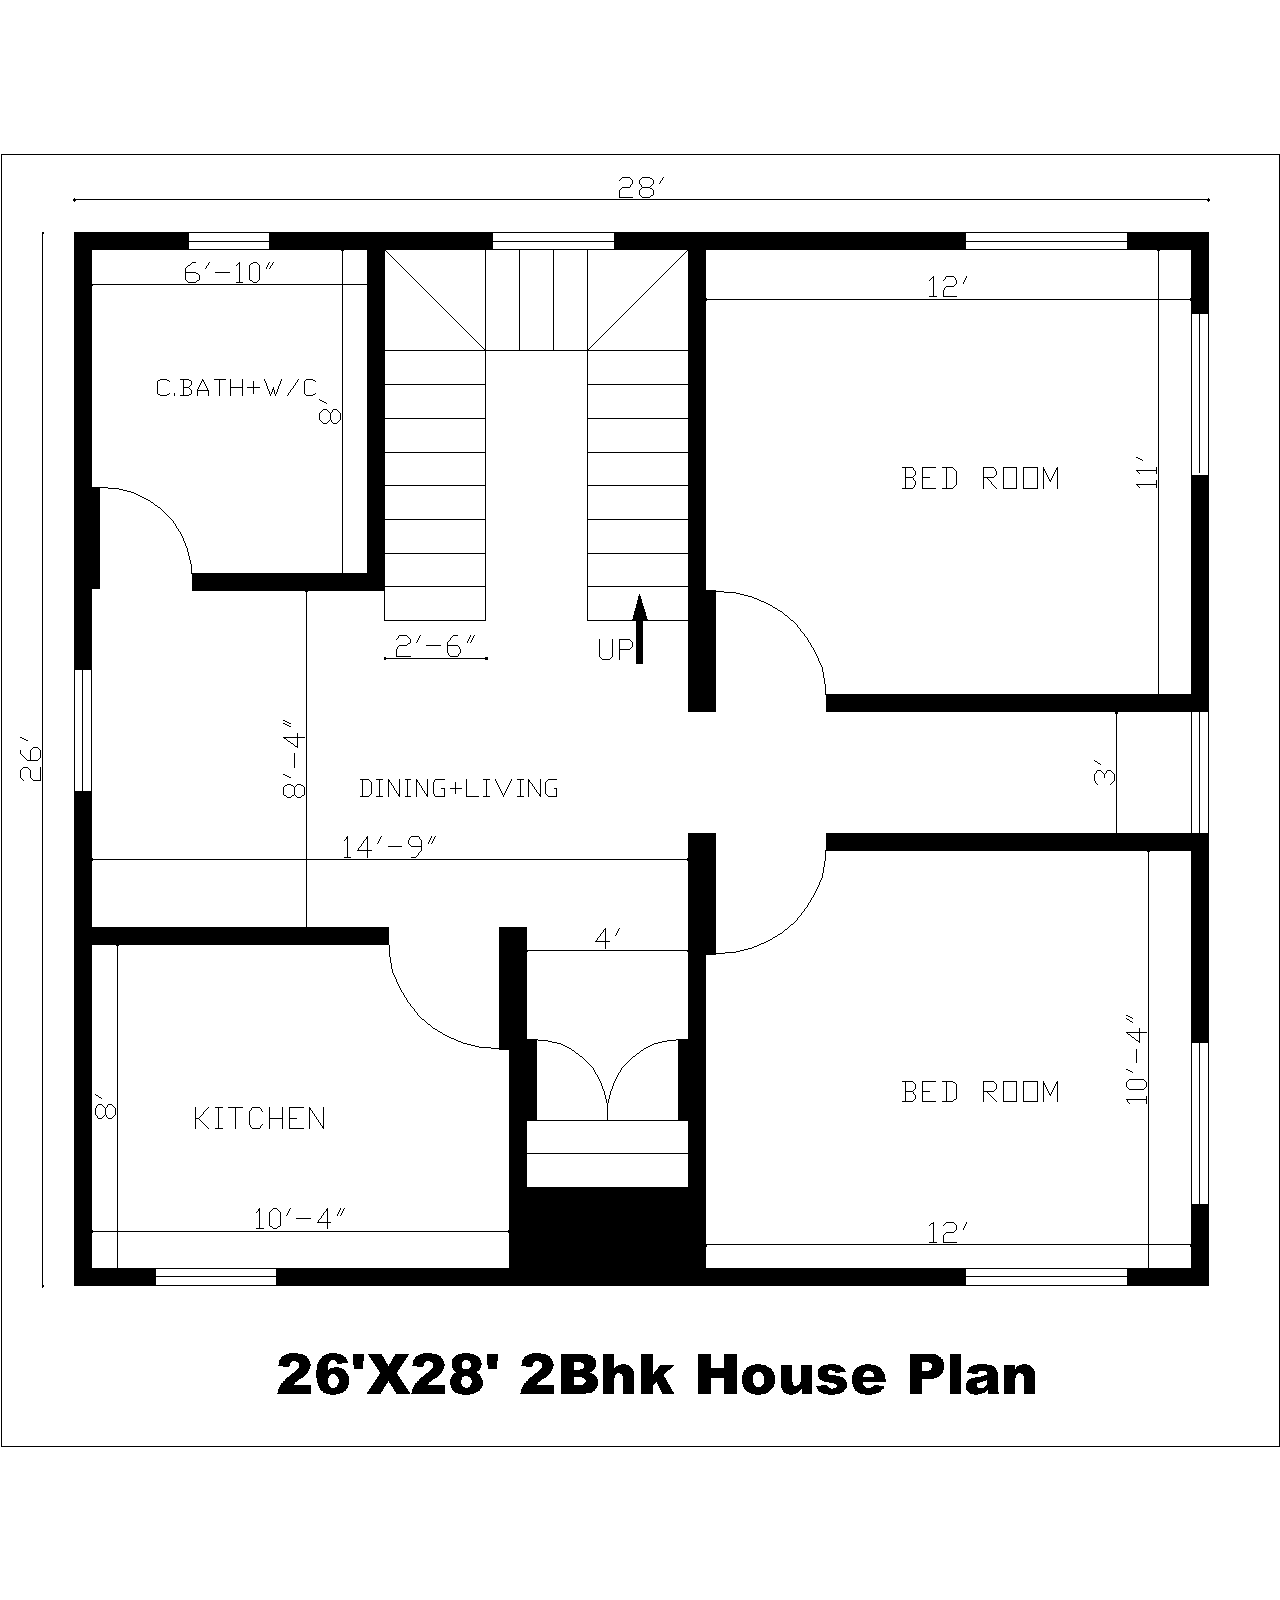 26'X28' 2Bhk House Plan